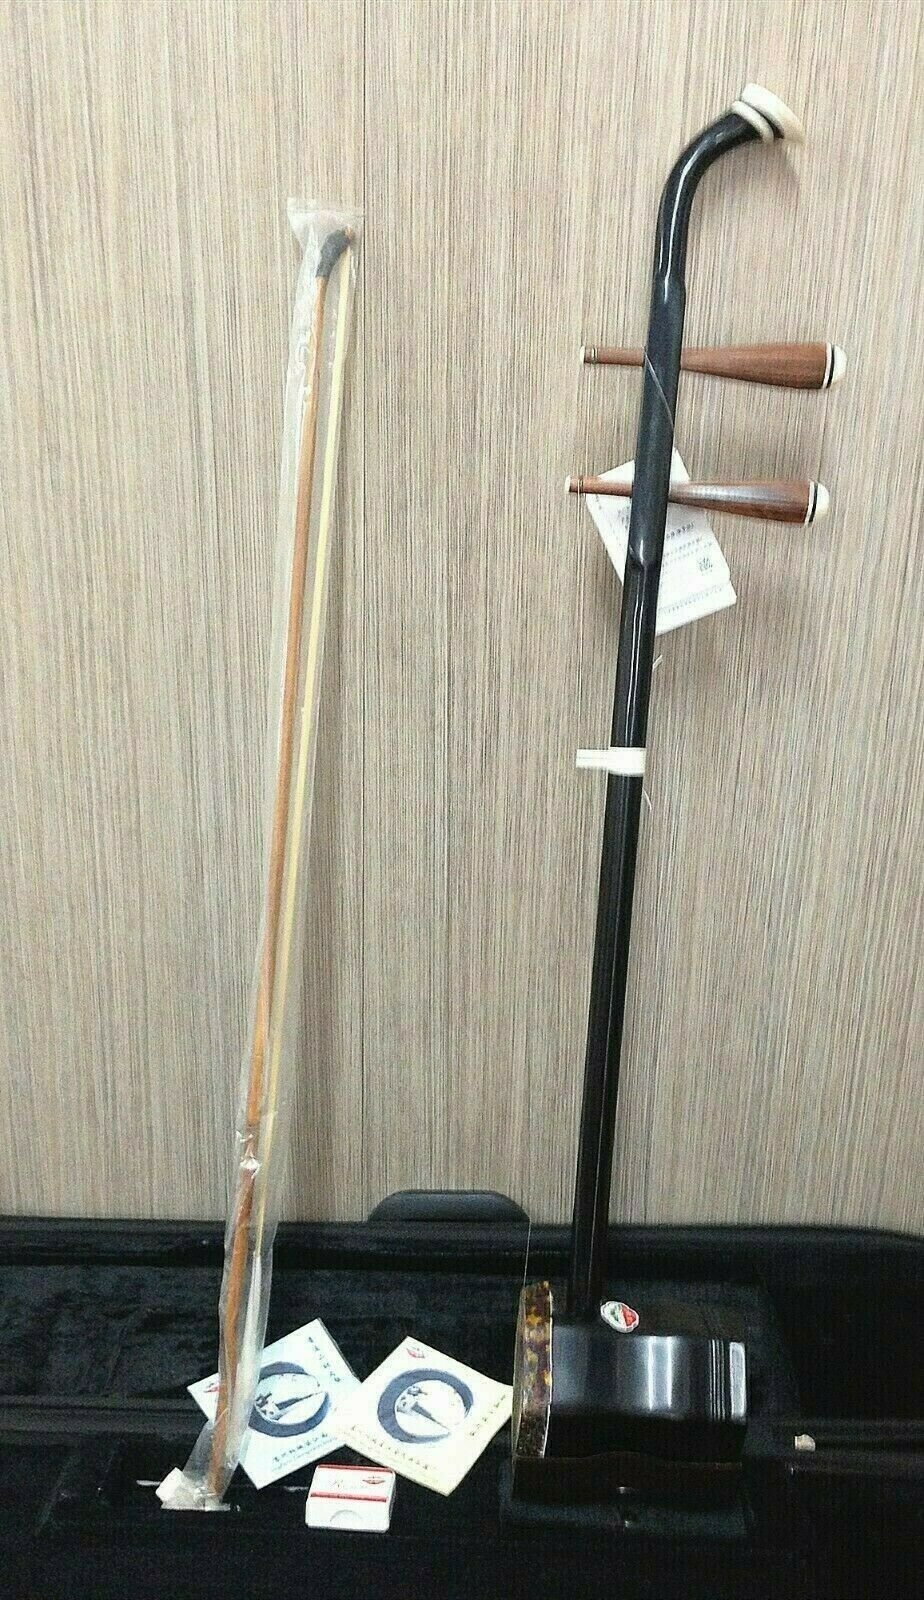 Chinese Erhu 2-string Violin Fiddle Musical Instrument Ling Yan L190